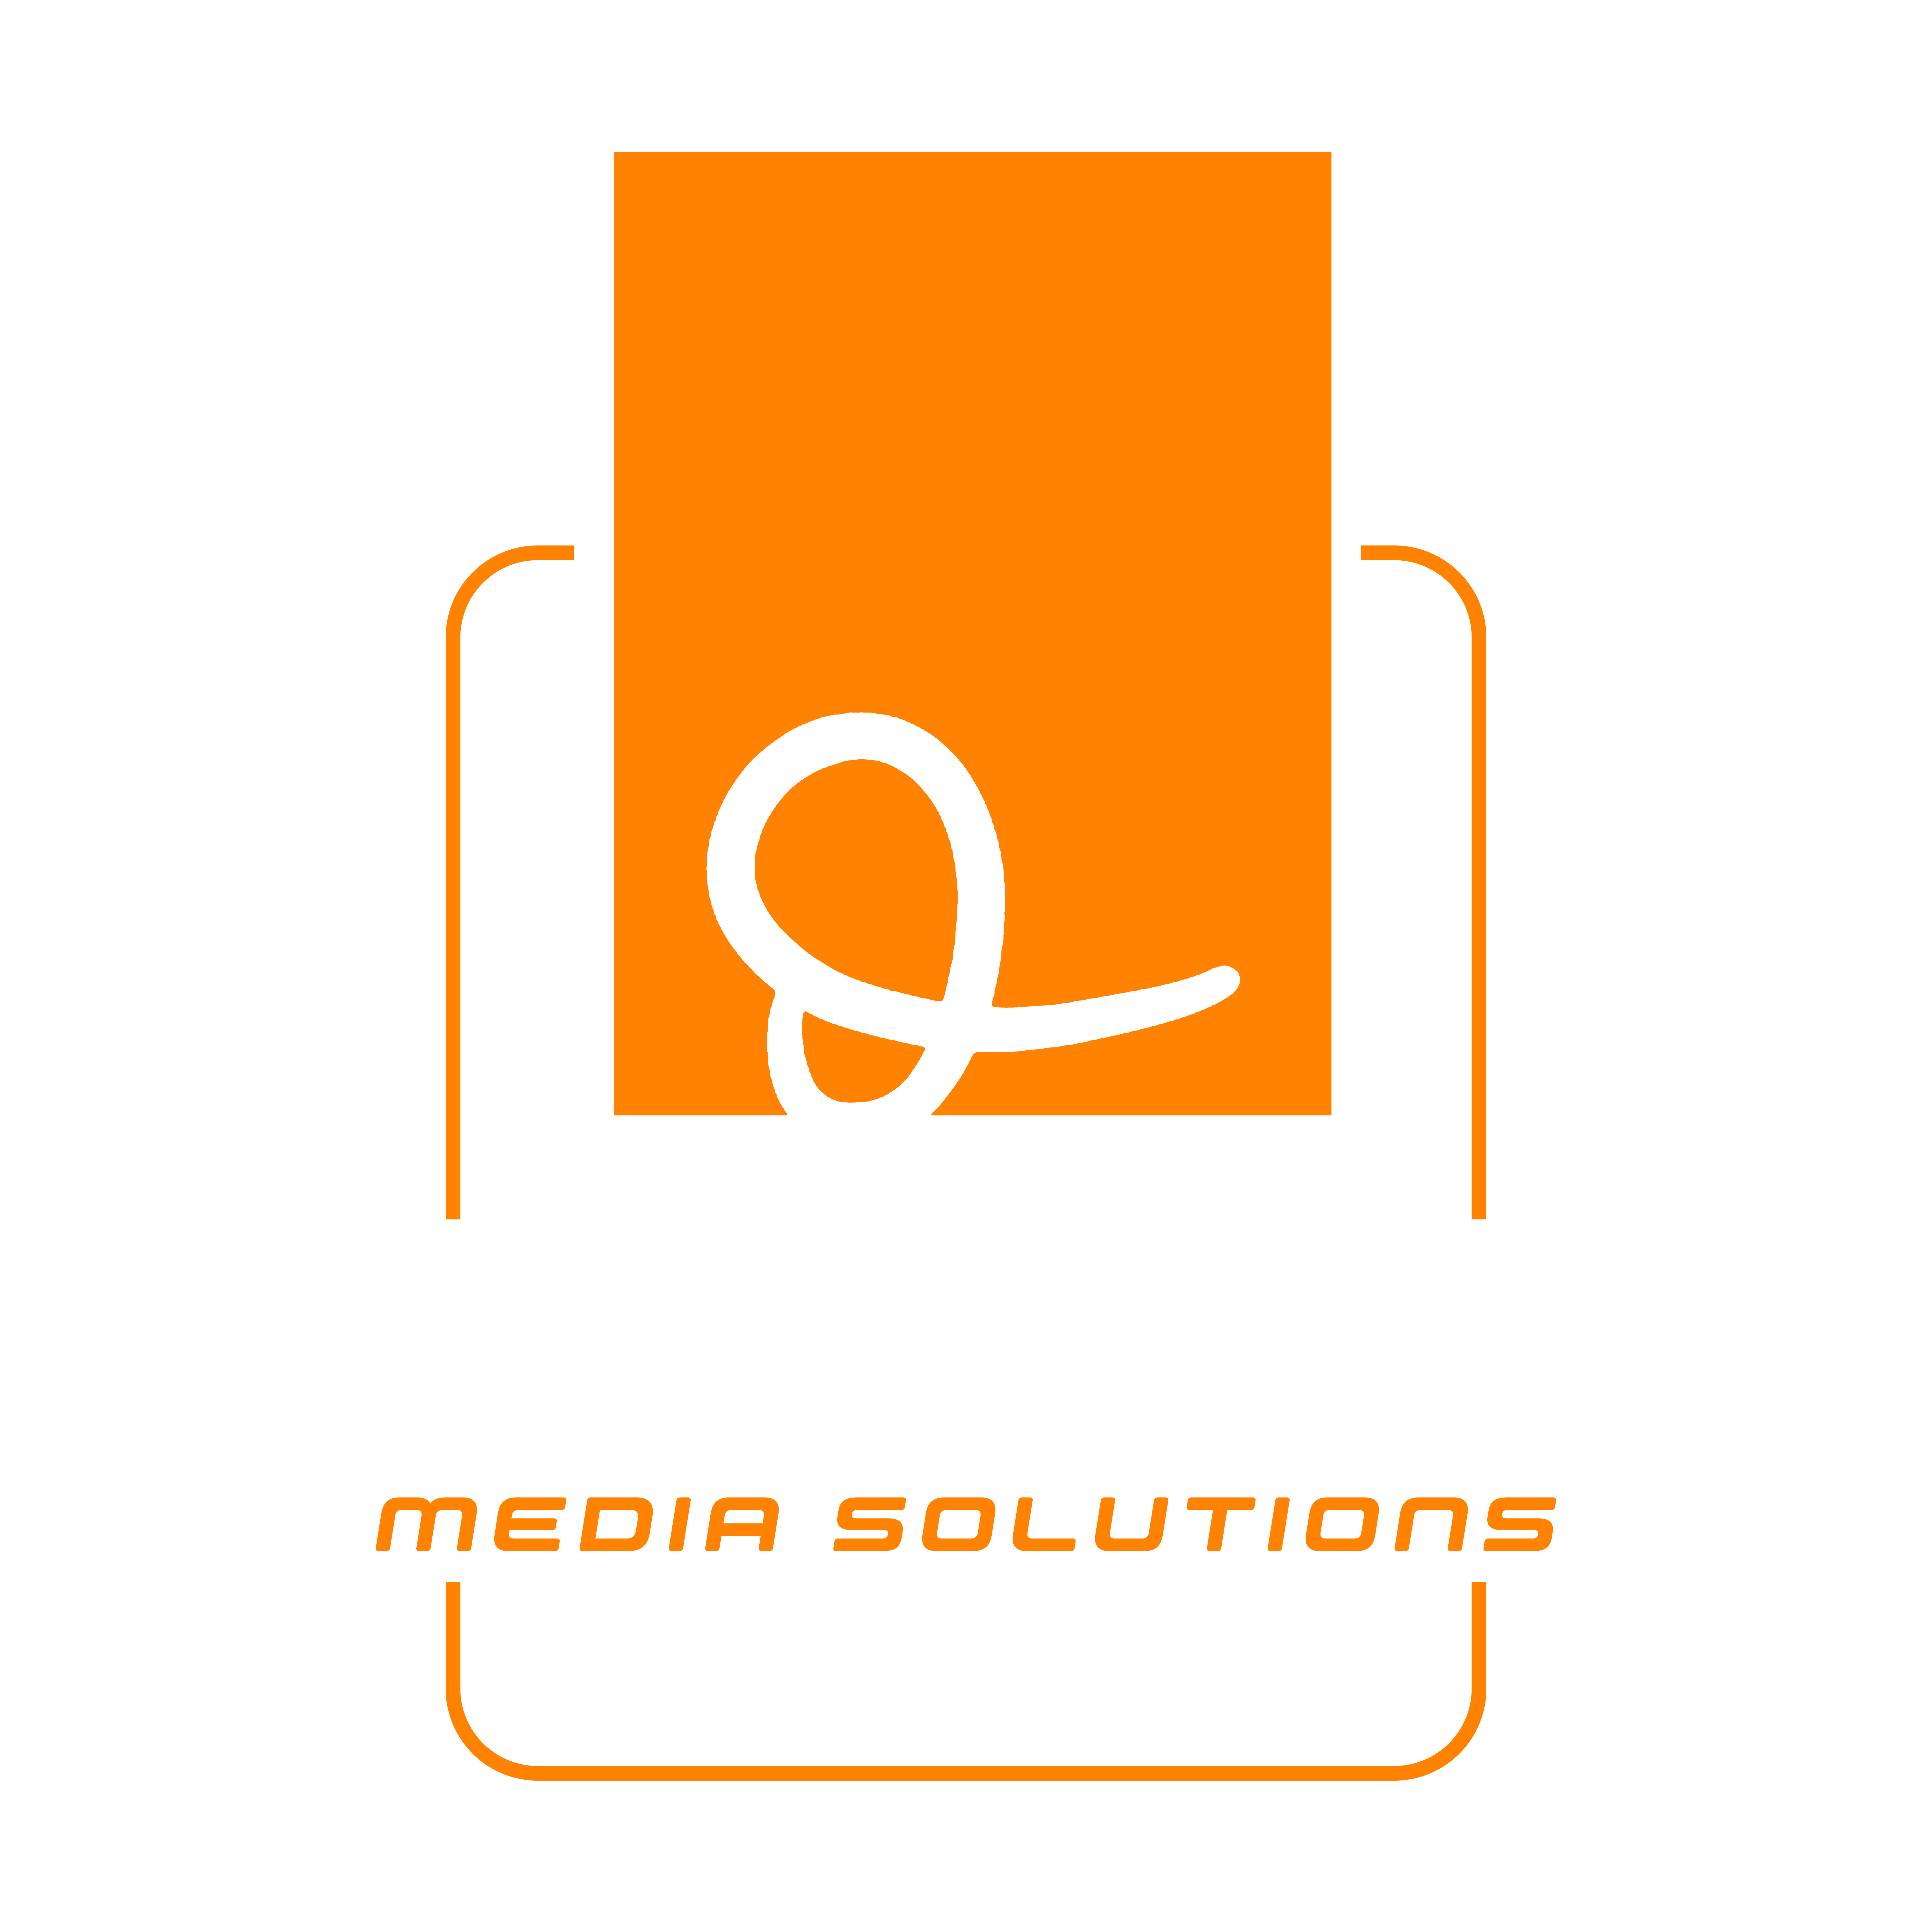 Ollivision Media Solutions